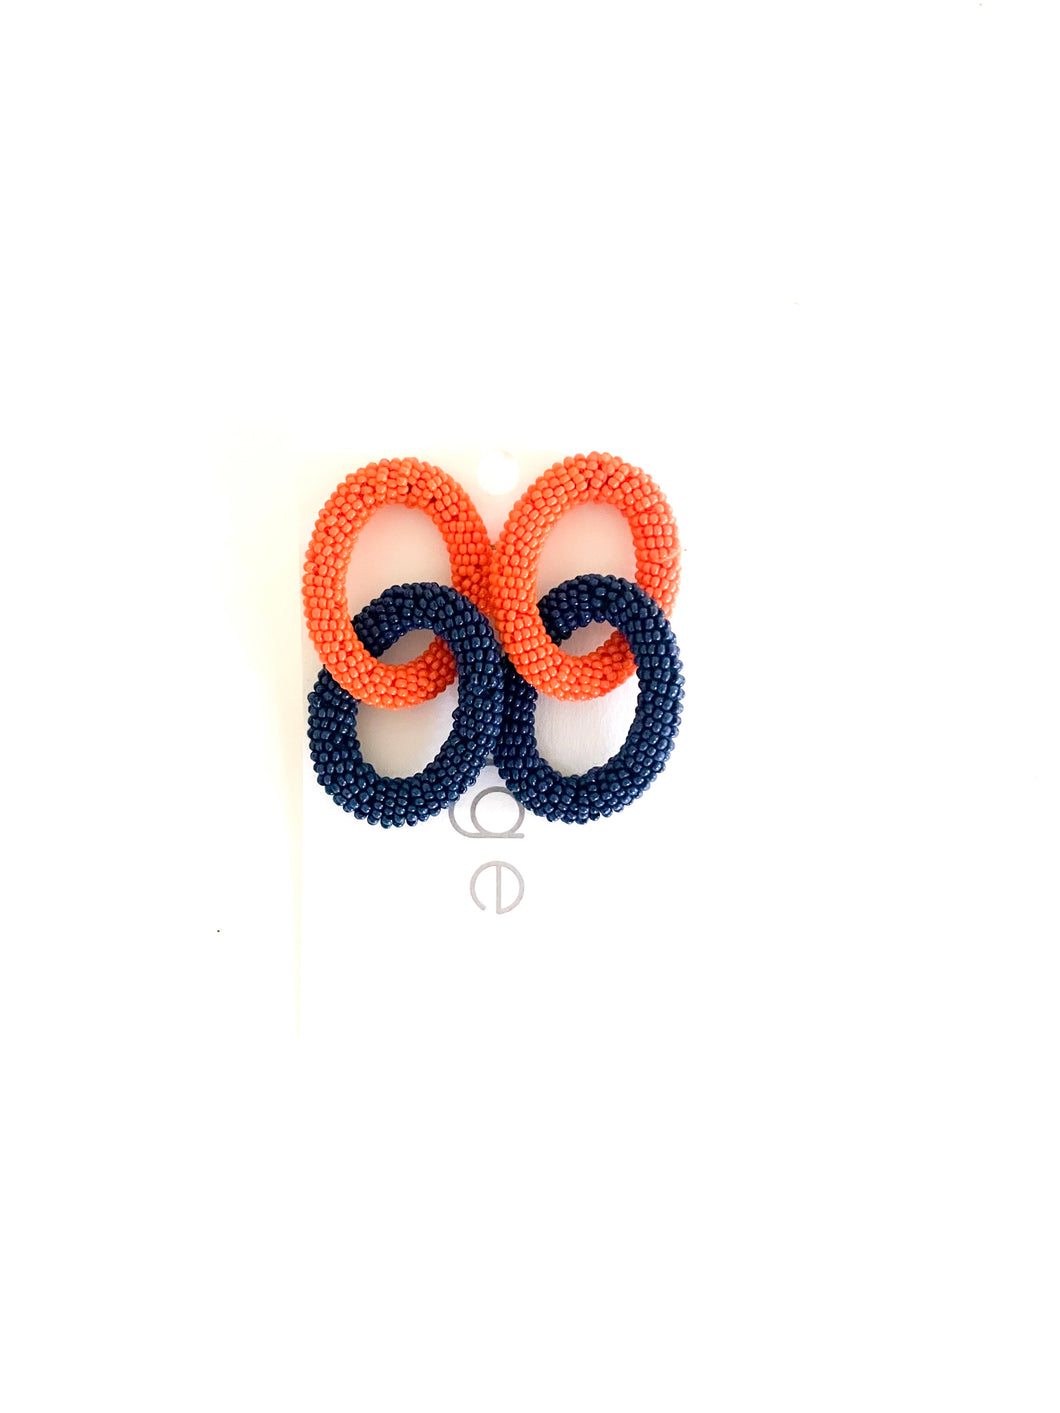 The Navy and Orange Beaded Double Hoop Earrings